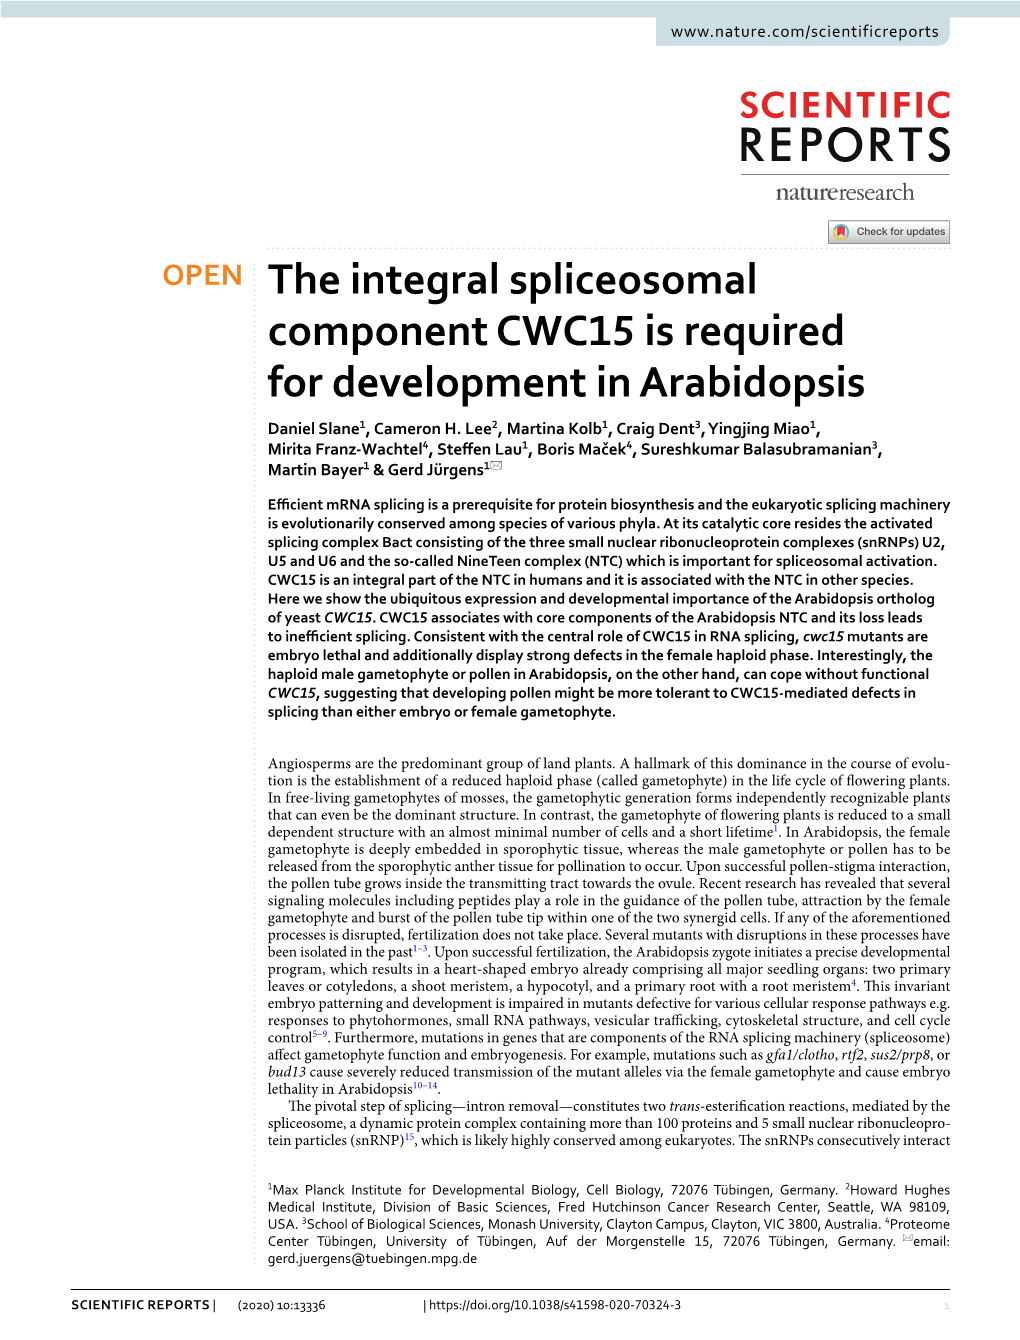 The Integral Spliceosomal Component CWC15 Is Required for Development in Arabidopsis Daniel Slane1, Cameron H